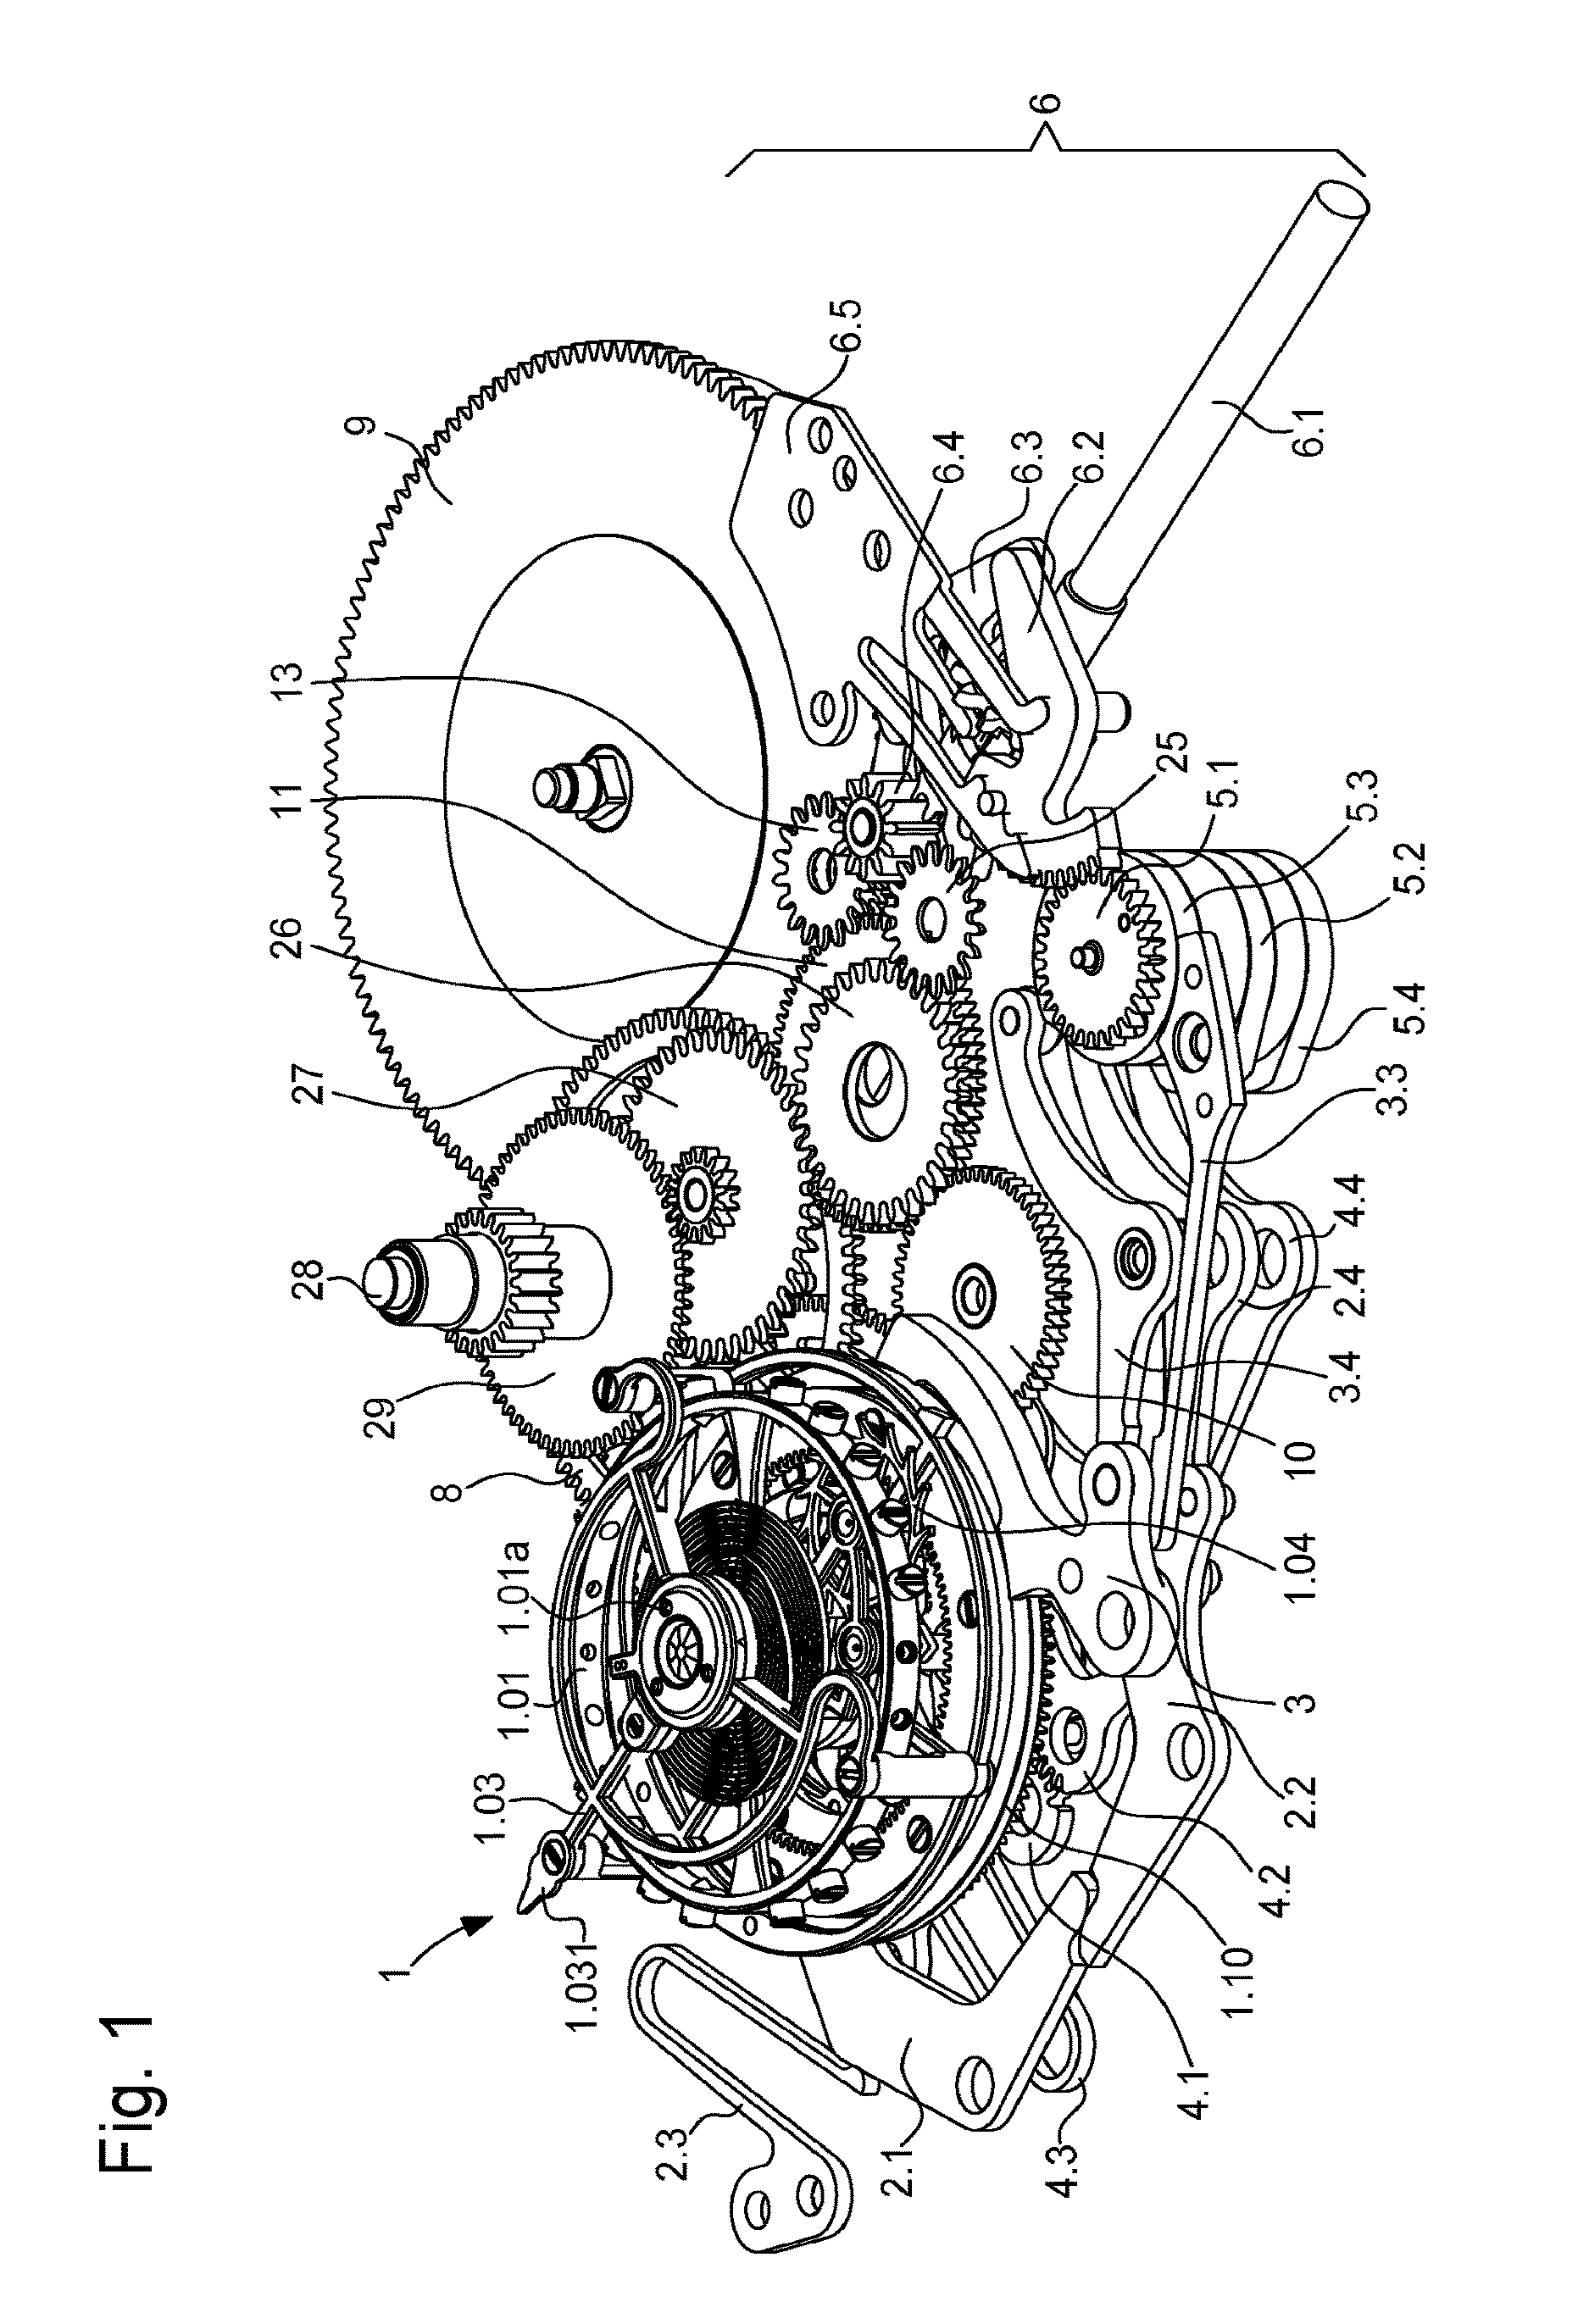 Mechanical clockwork movement with an adjustable tourbillon